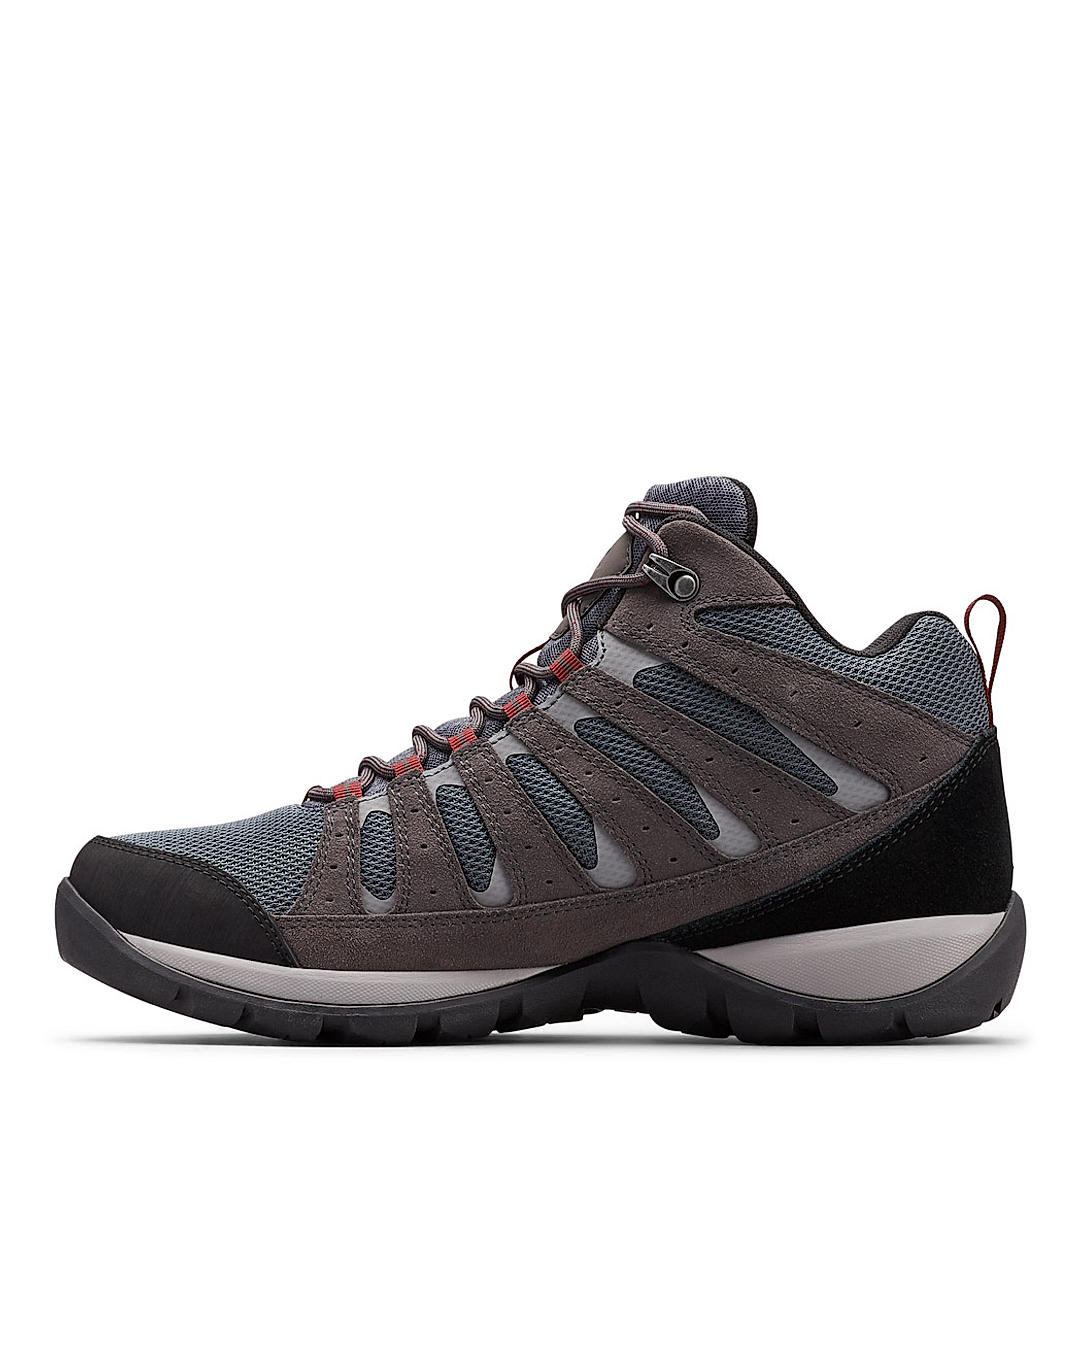 Columbia Men Grey REDMOND V2 MID Water Resistant Shoes